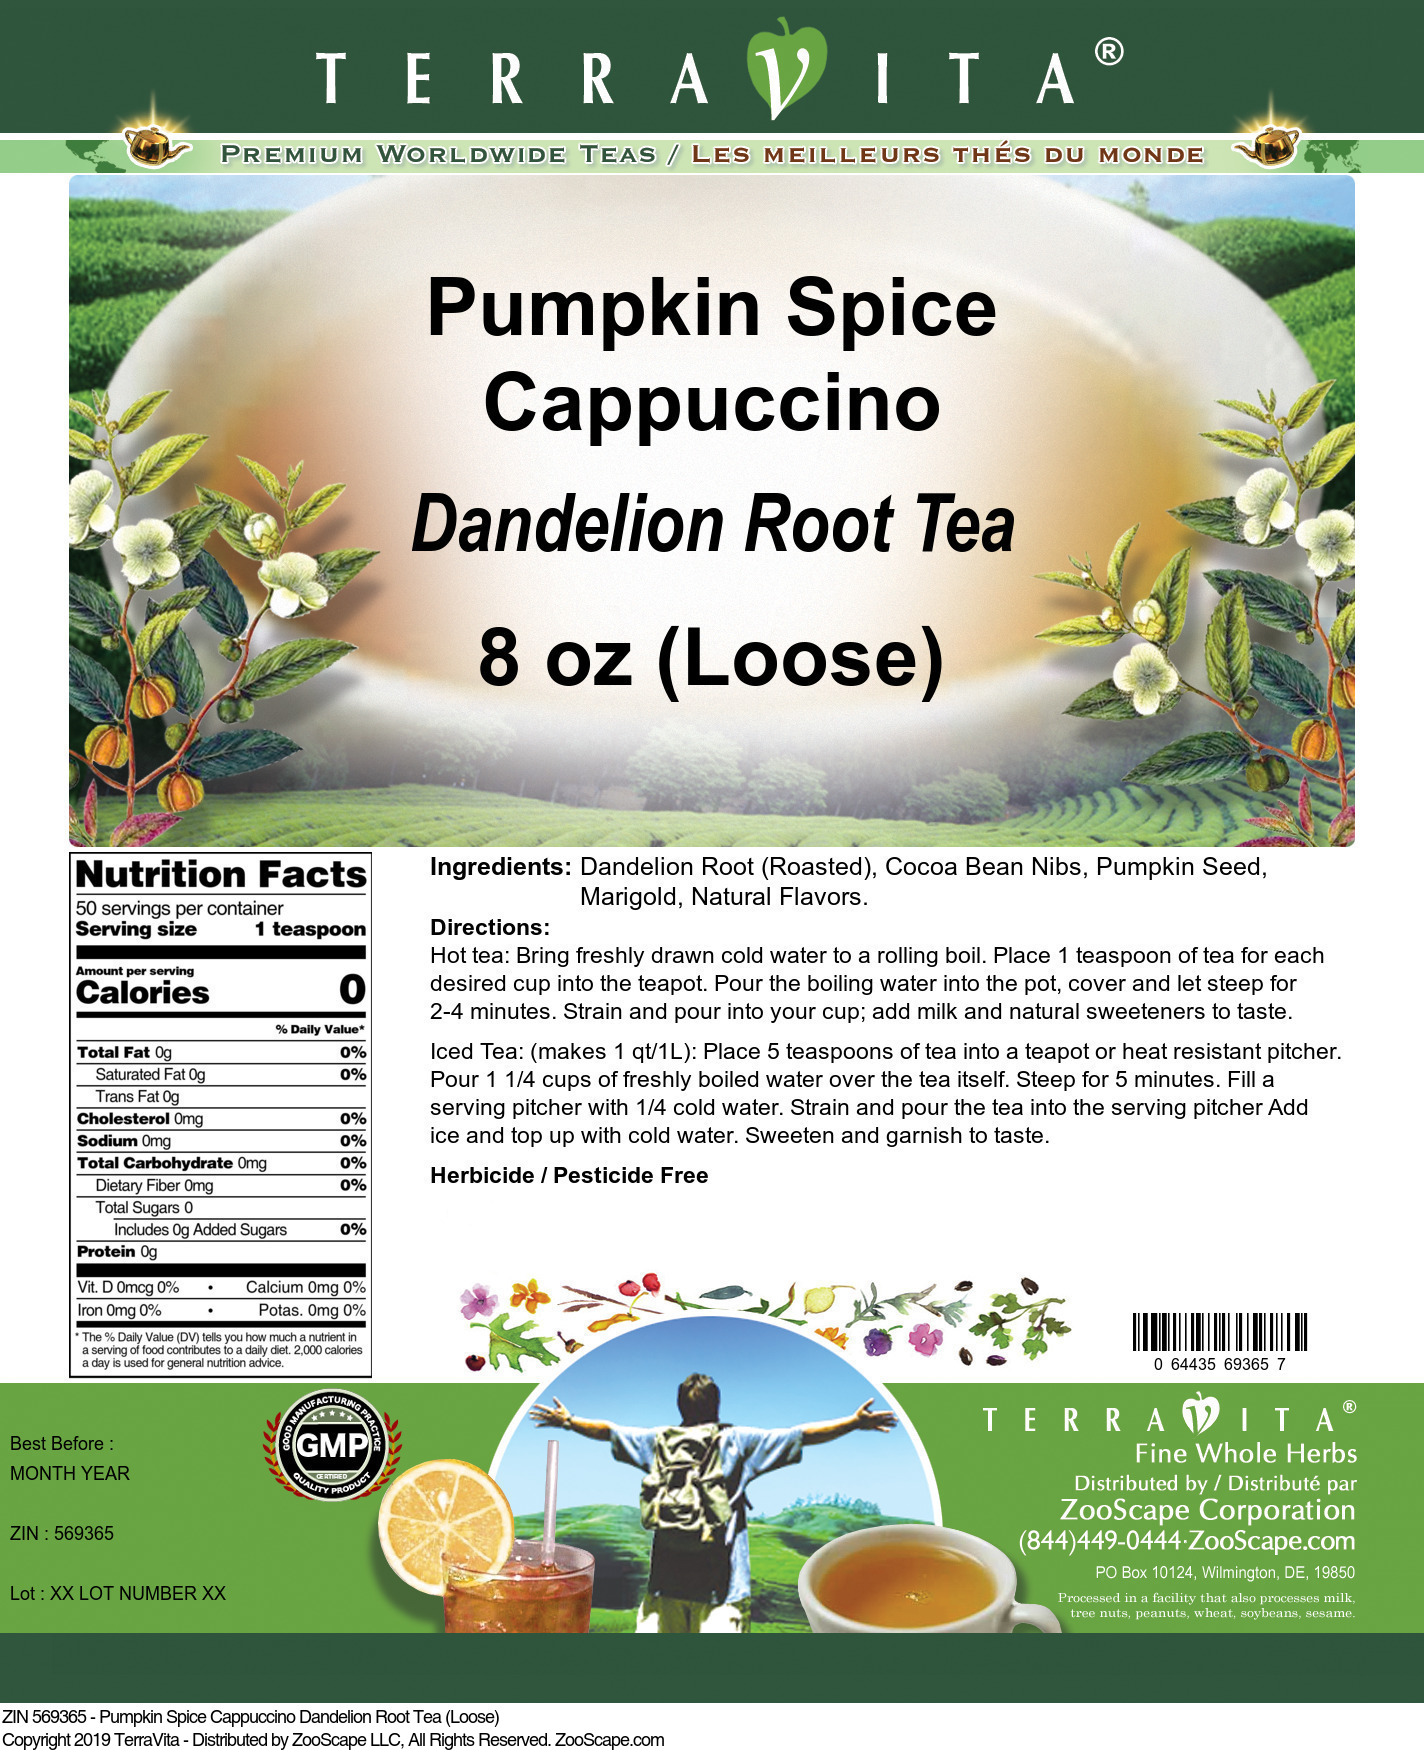 Pumpkin Spice Cappuccino Dandelion Root Tea (Loose) - Label